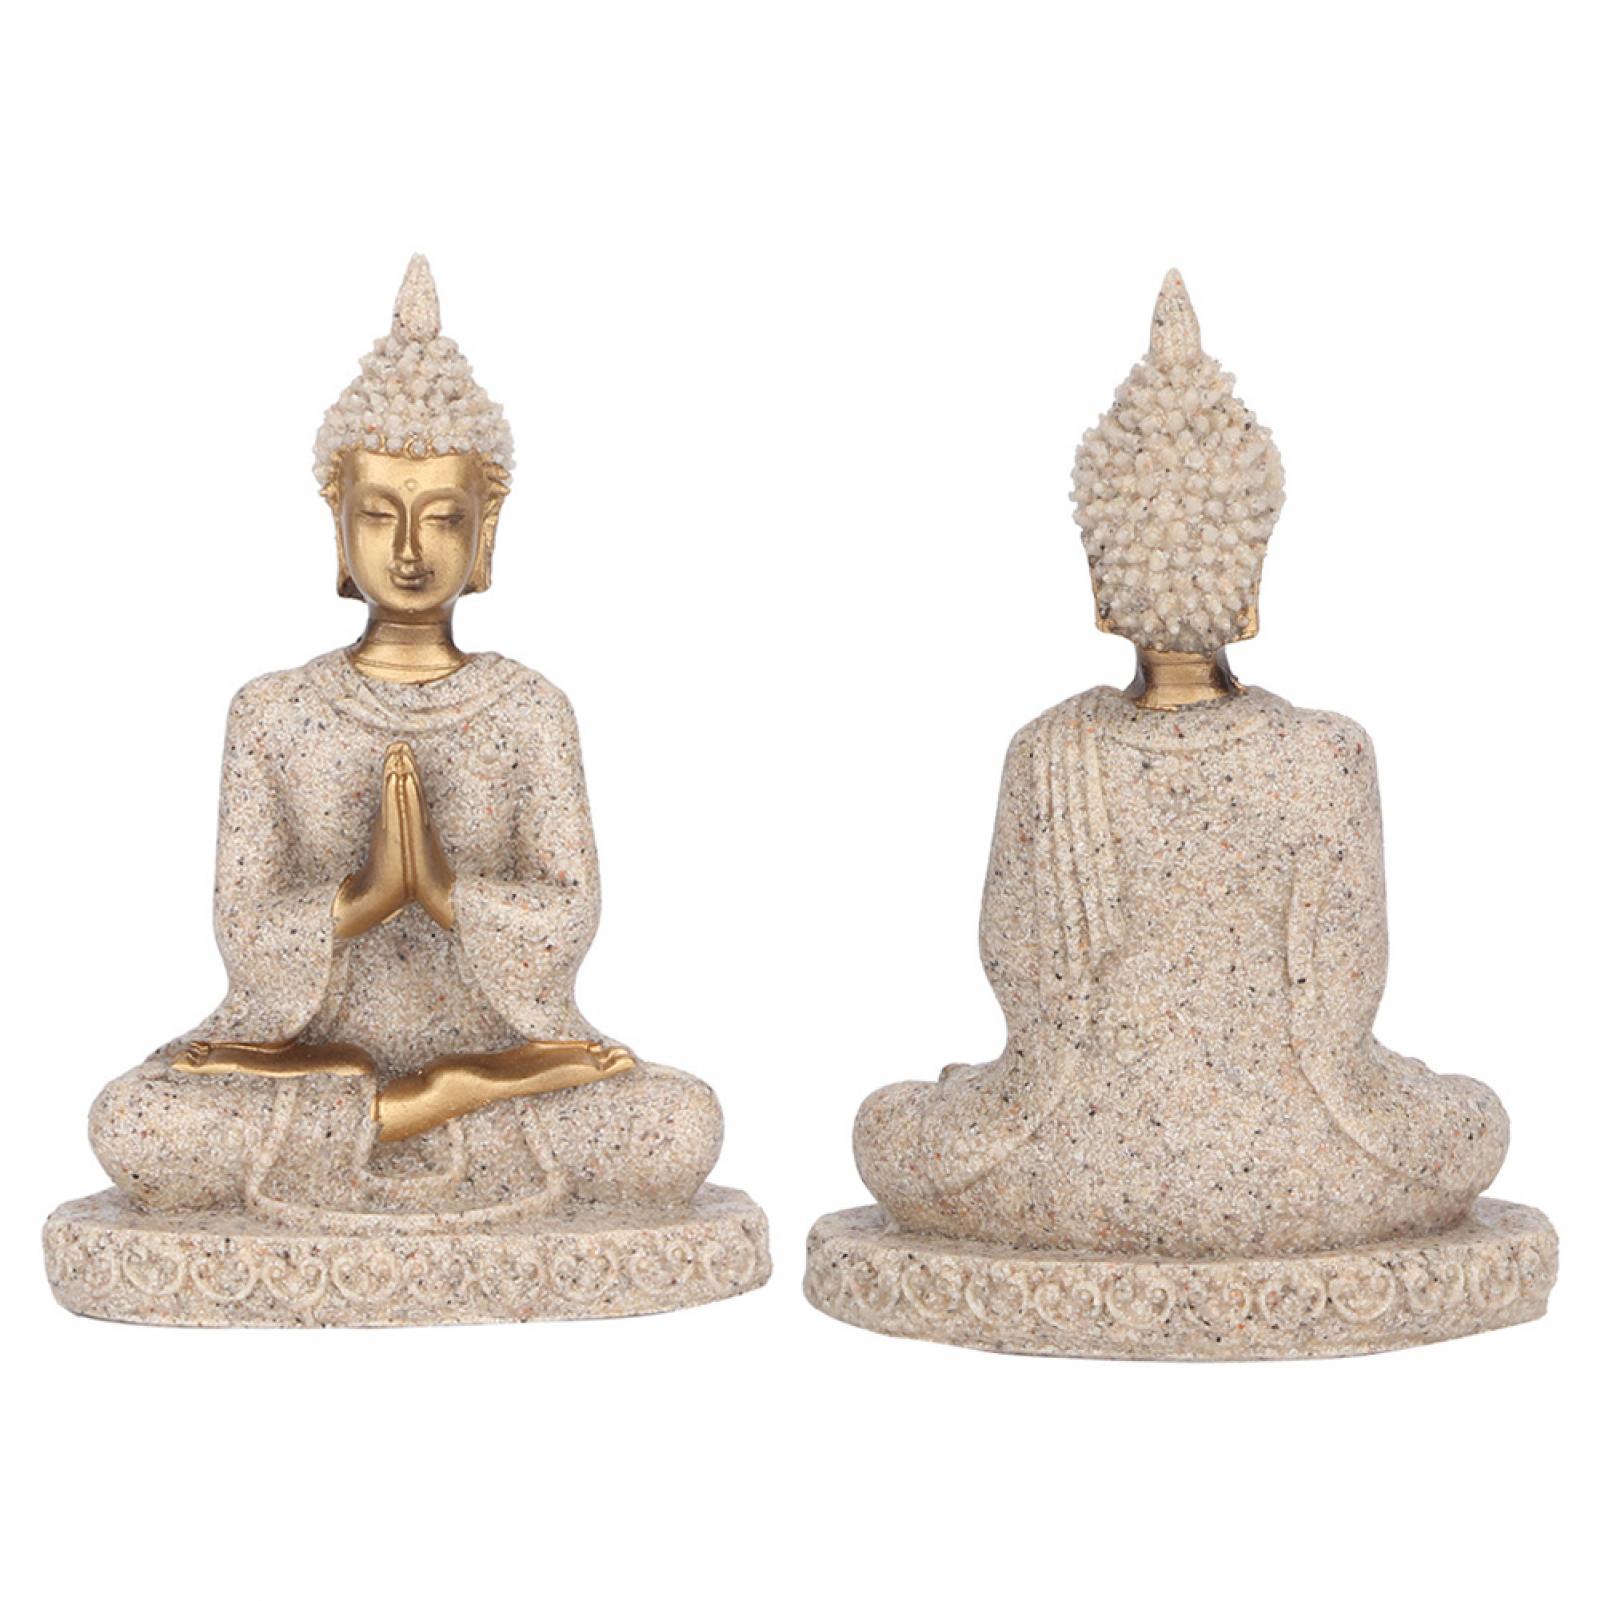 Meditating Seated Buddha Statue Carving Figurine Craft for Home Decoration Ornament, Buddha Figurine,Buddha Statue - image 5 of 8